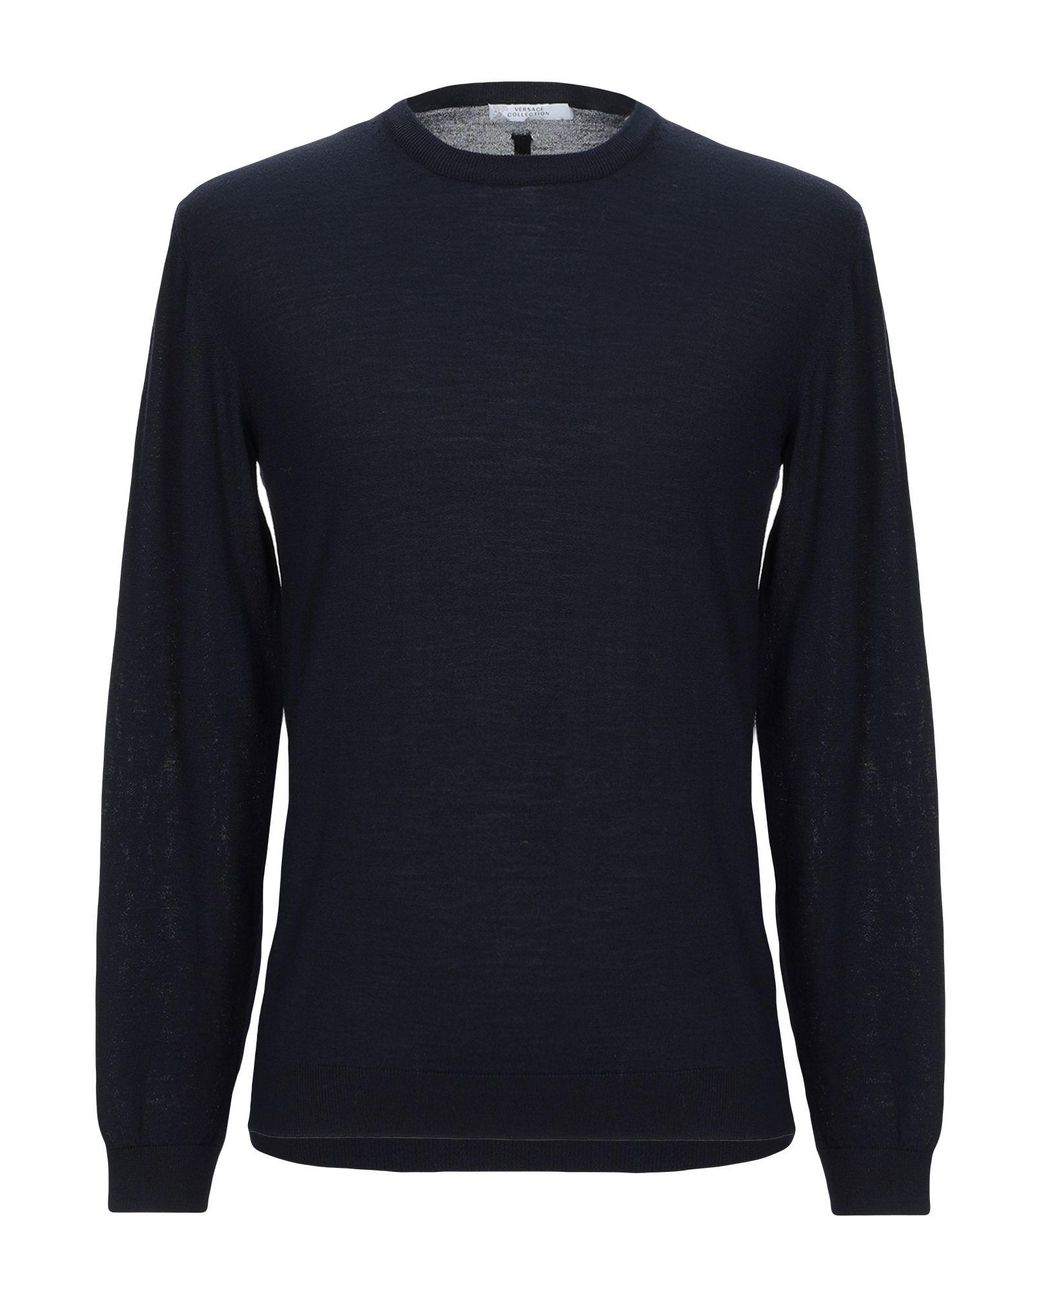 Versace Wool Sweater in Blue for Men - Lyst